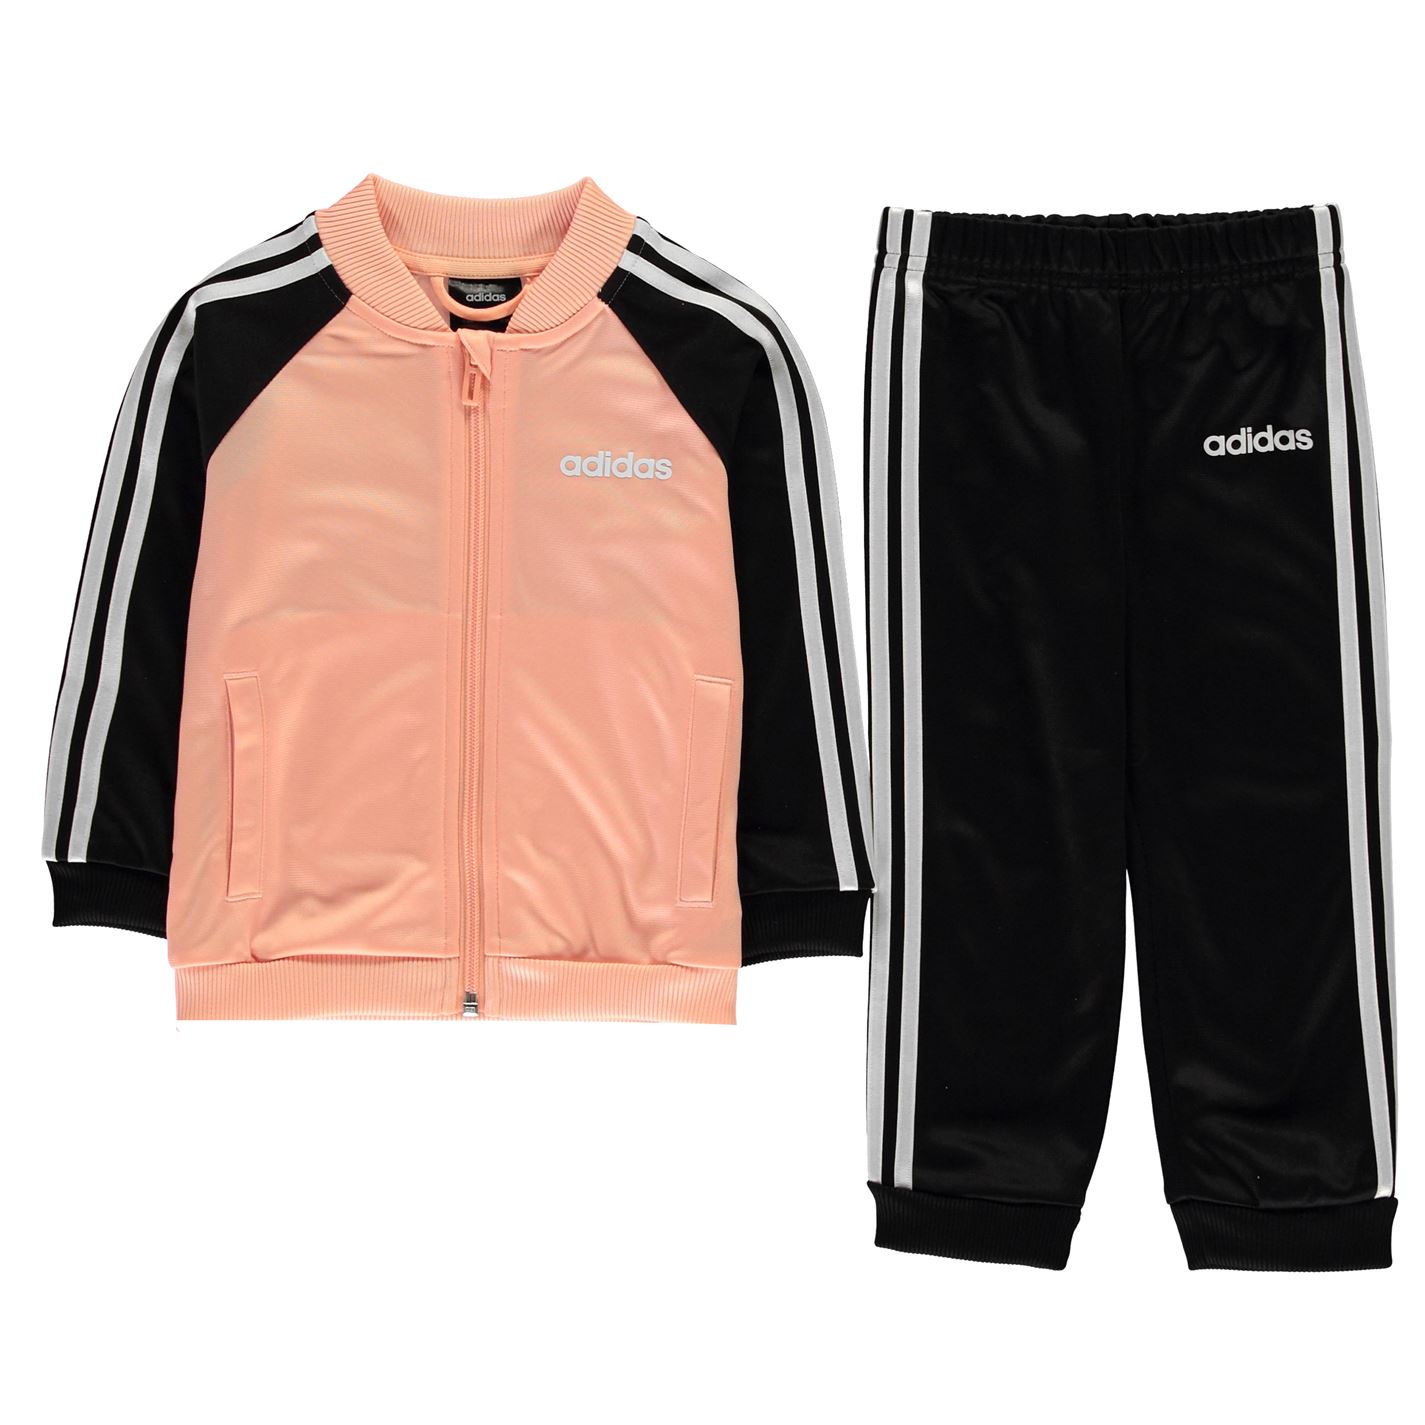 adidas Youth Jogger pentru Copii negru roz